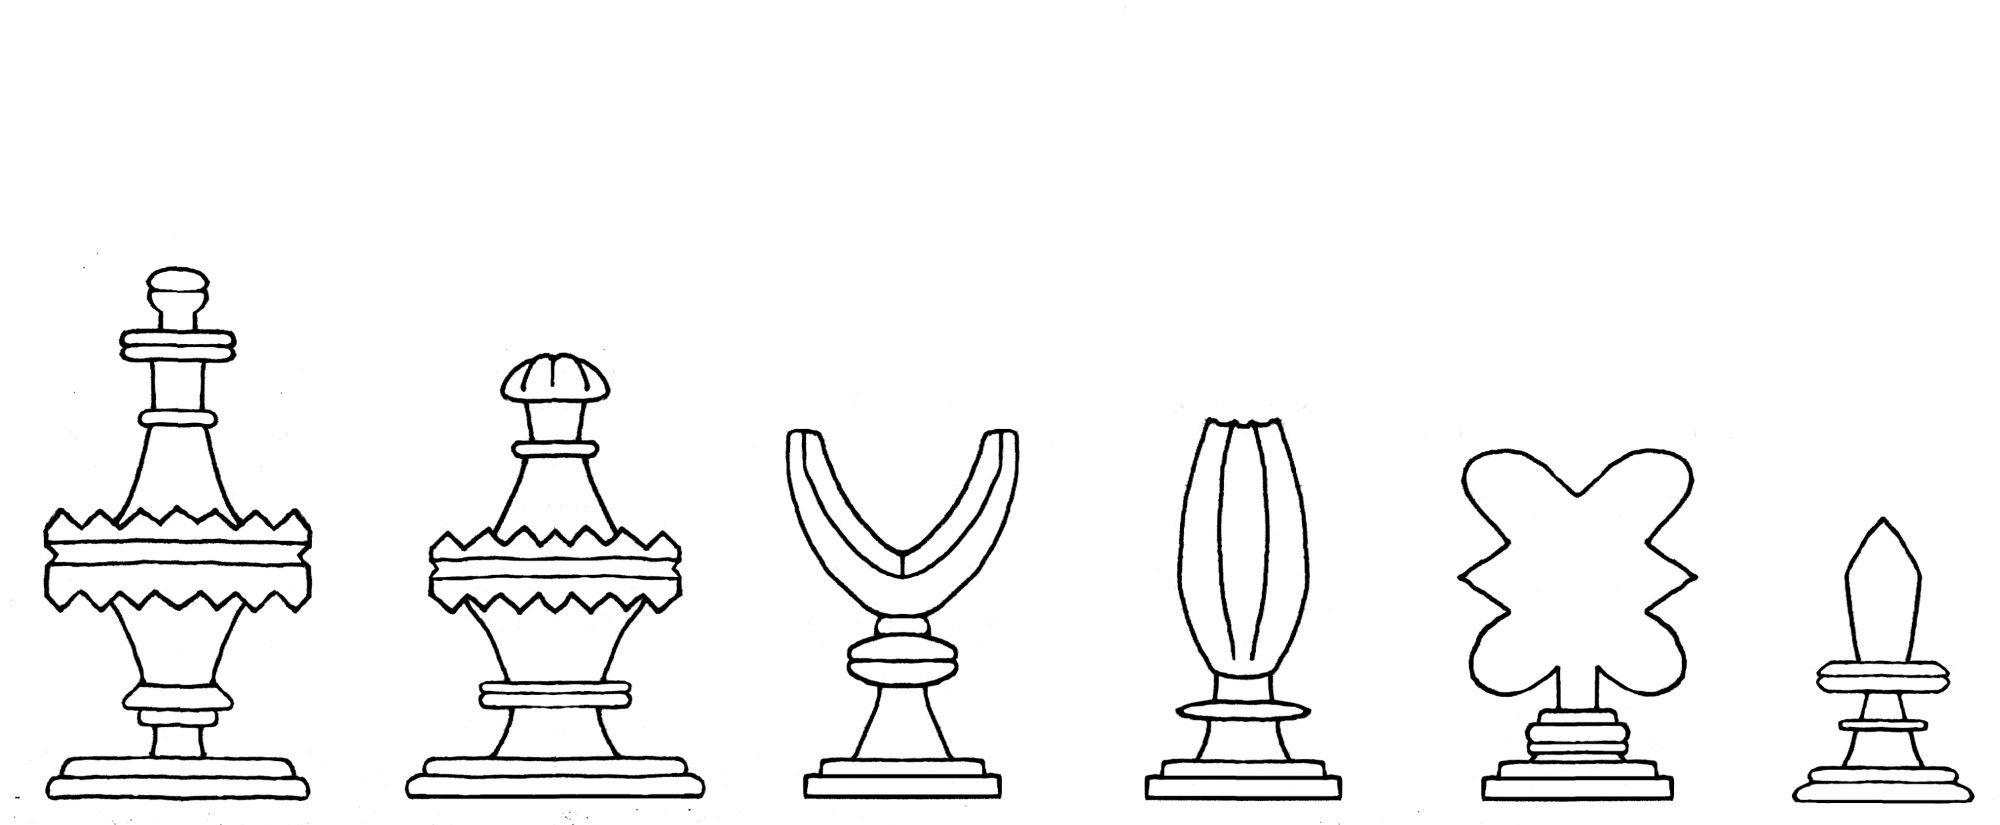 Kobel chess set number 1 interpretive diagram